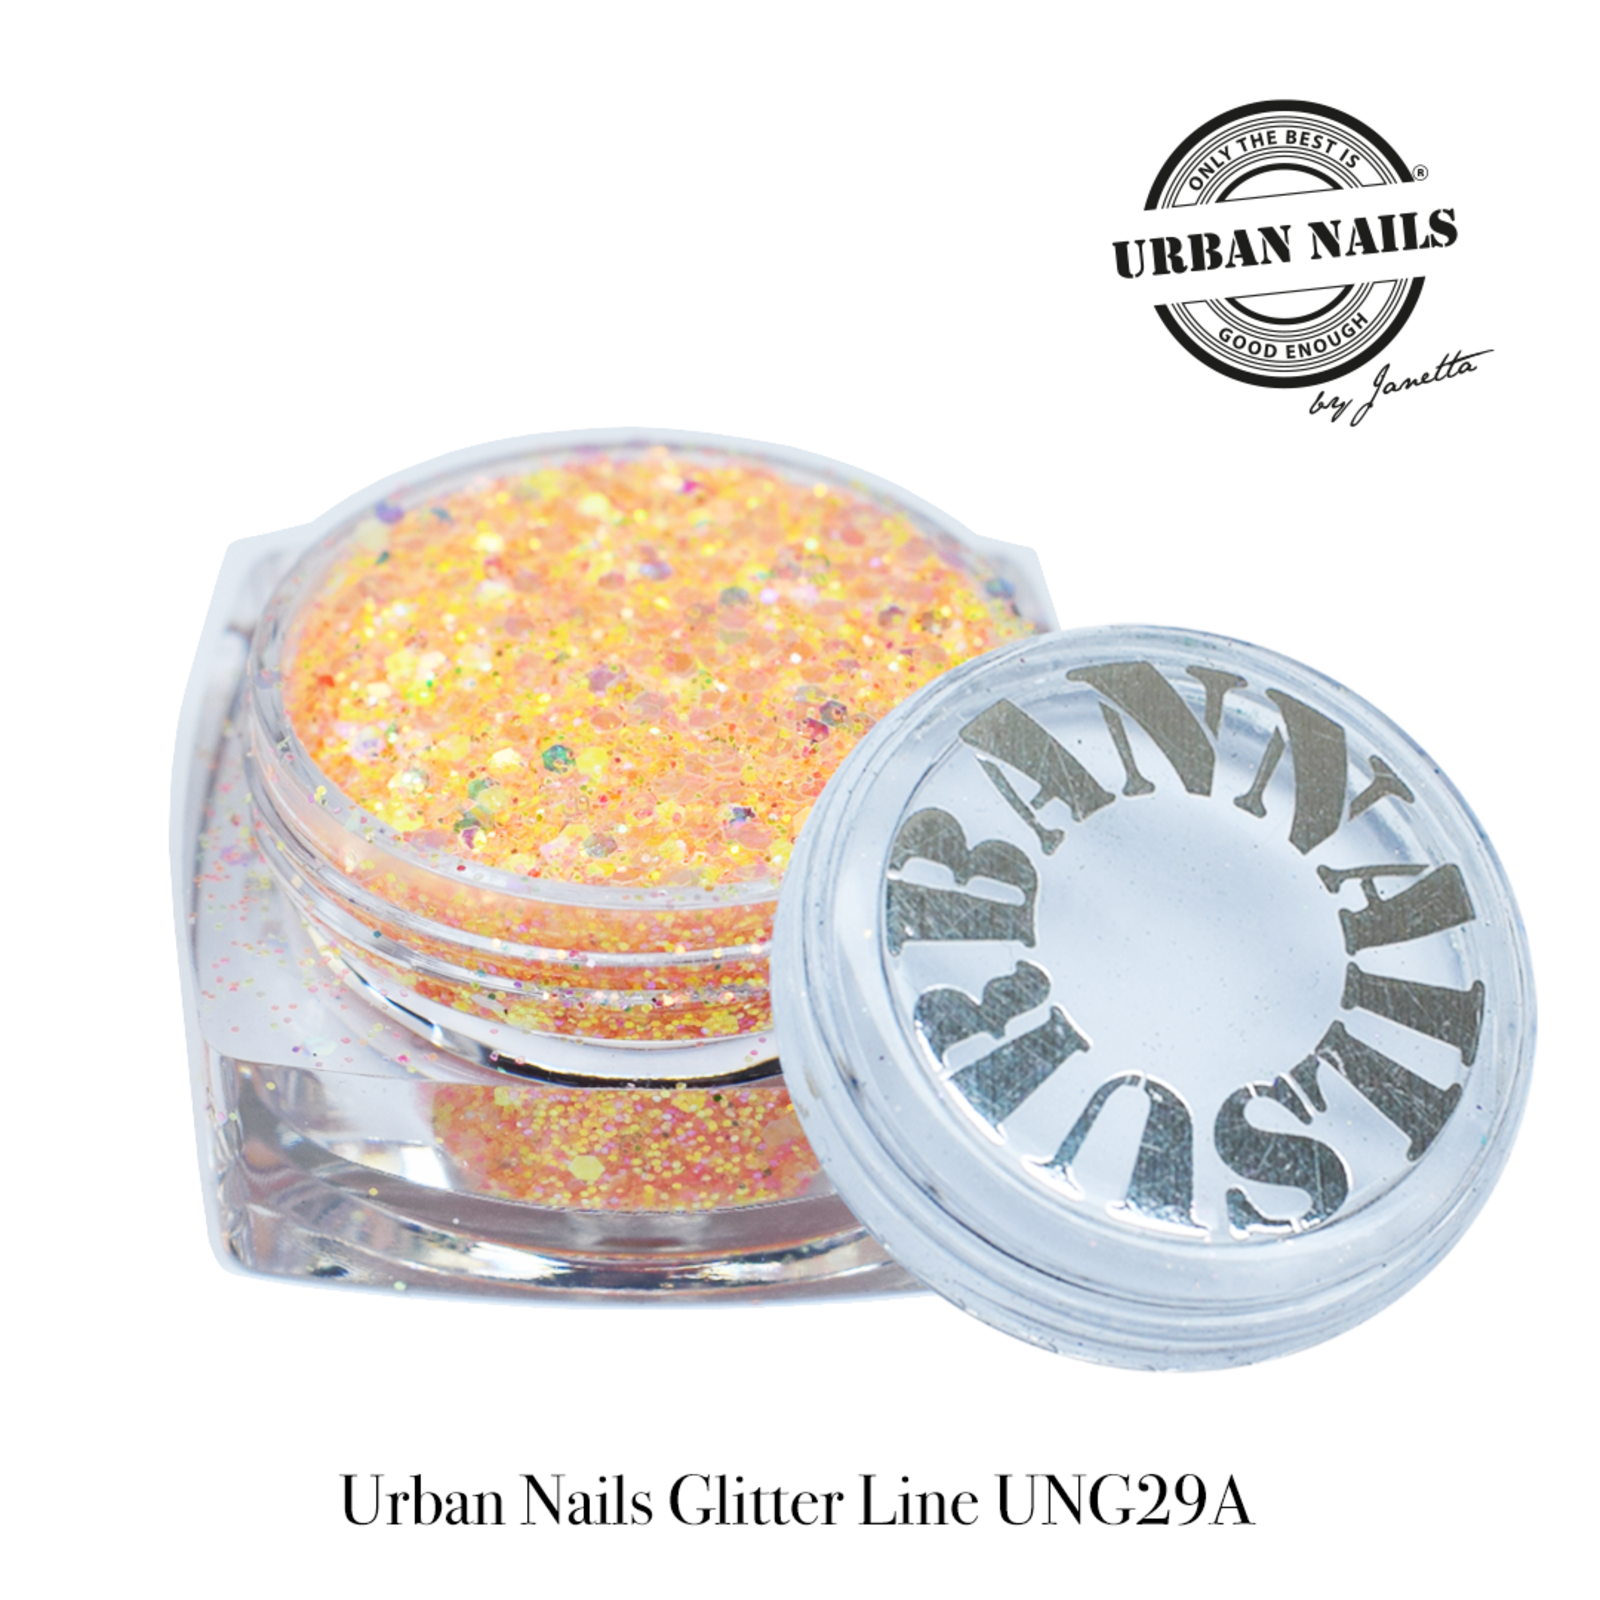 Urban nails Glitter Line UNG29-A